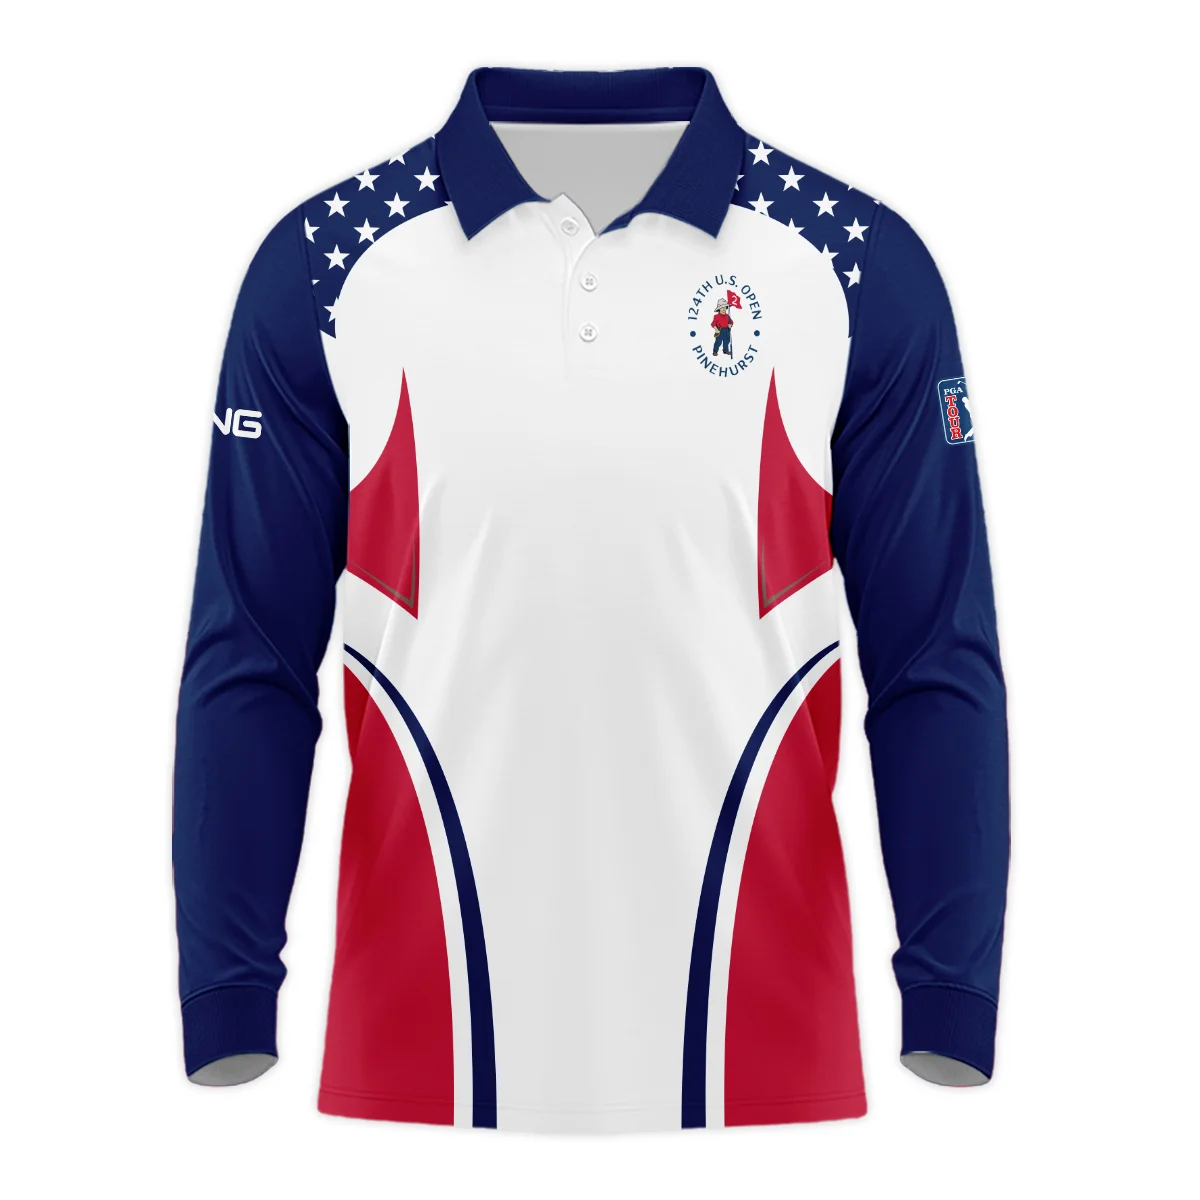 124th U.S. Open Pinehurst Ping Stars White Dark Blue Red Line Long Polo Shirt Style Classic Long Polo Shirt For Men